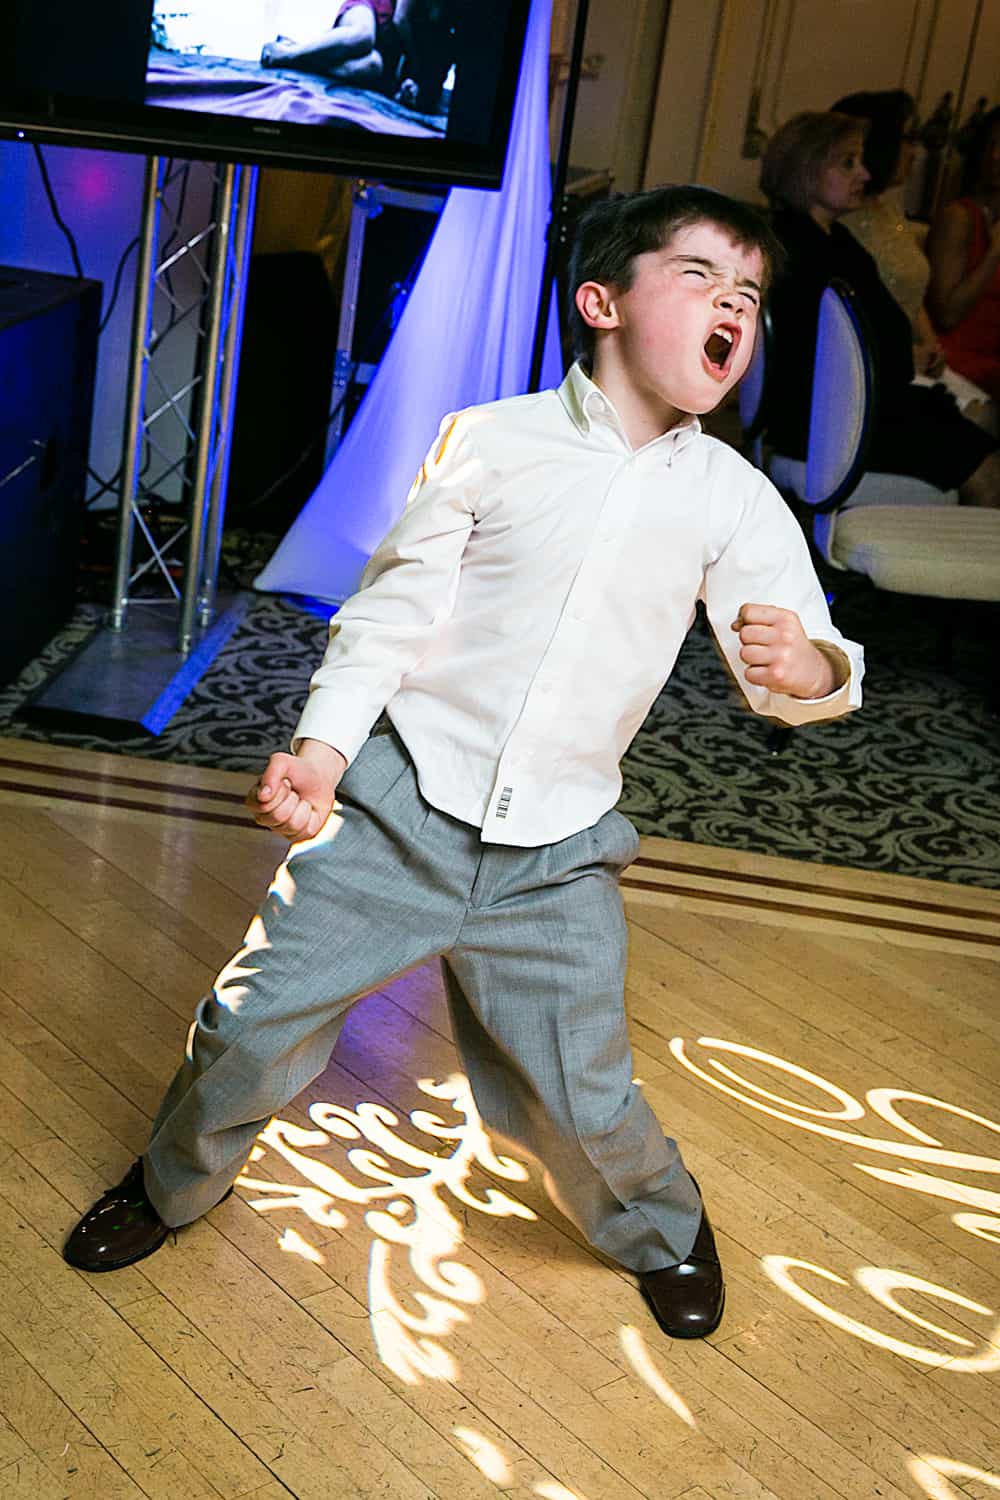 Little boy dancing wildly during Manor wedding reception